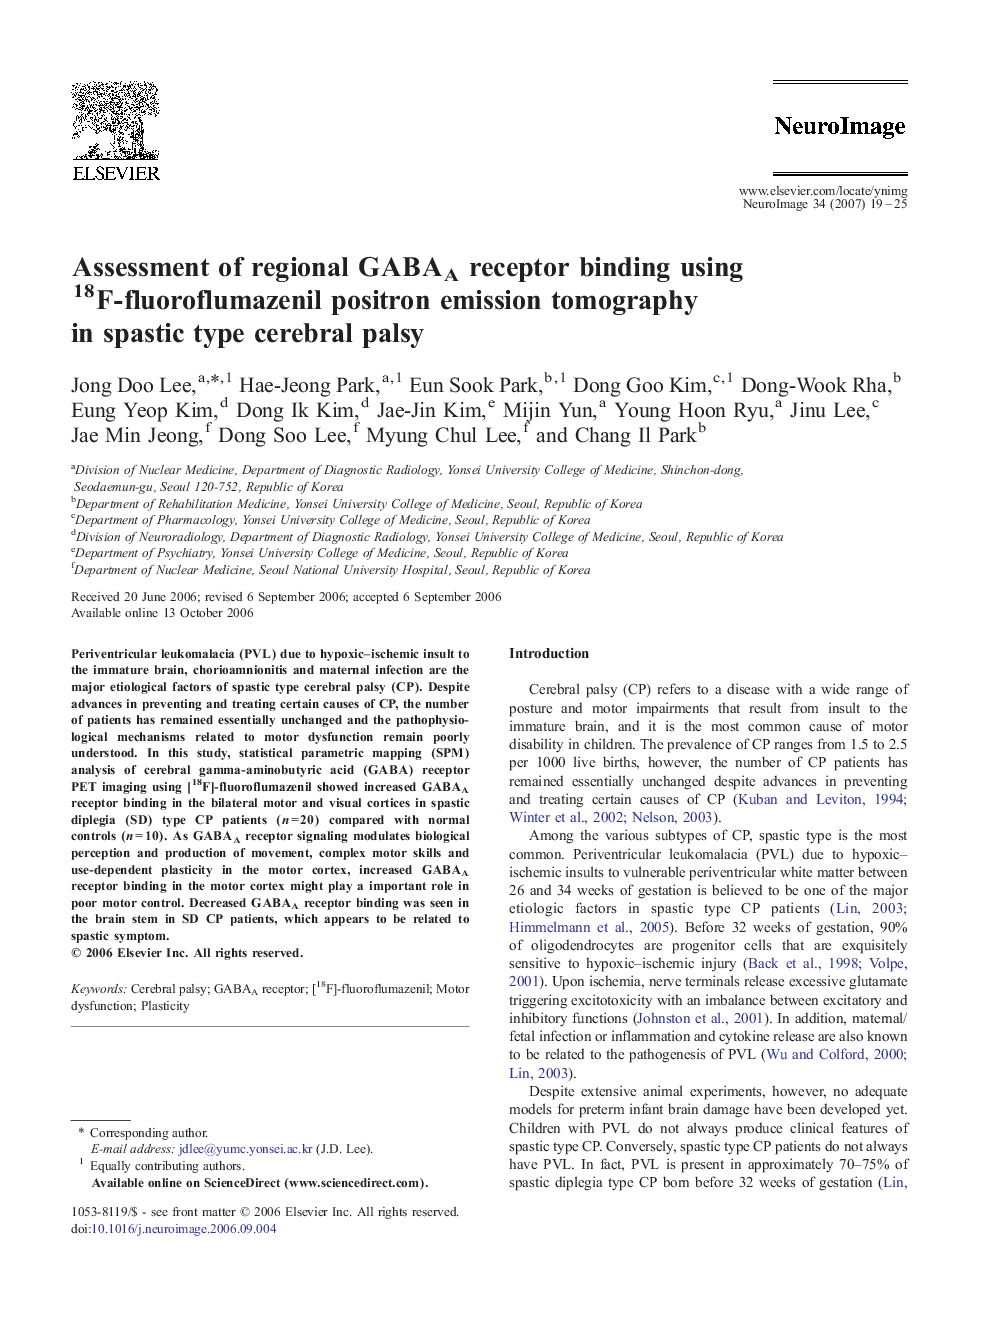 Assessment of regional GABAA receptor binding using 18F-fluoroflumazenil positron emission tomography in spastic type cerebral palsy